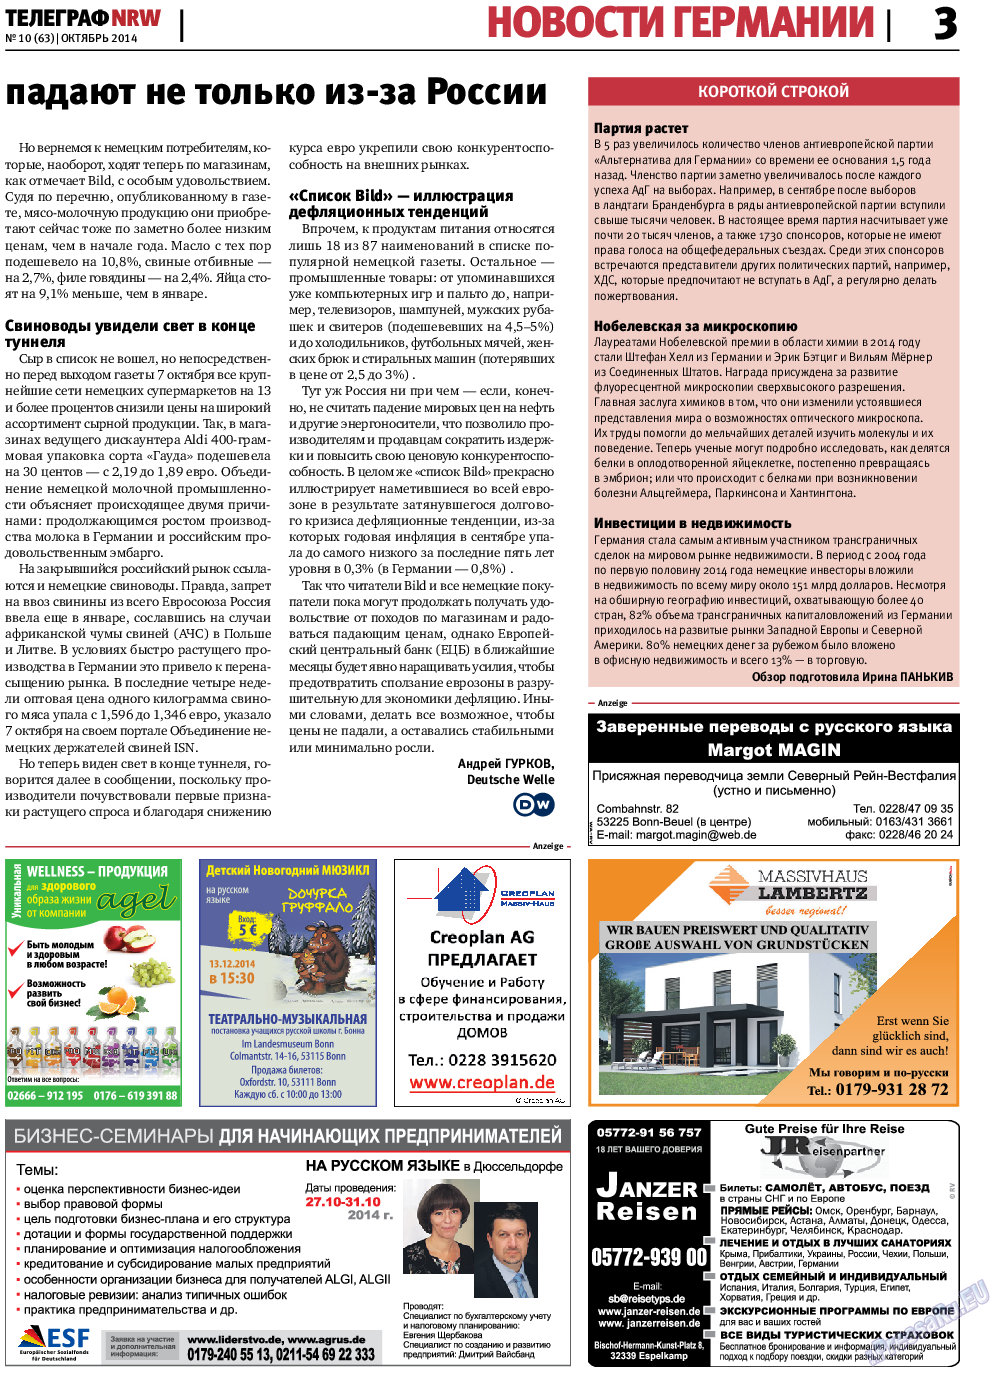 Телеграф NRW, газета. 2014 №10 стр.3